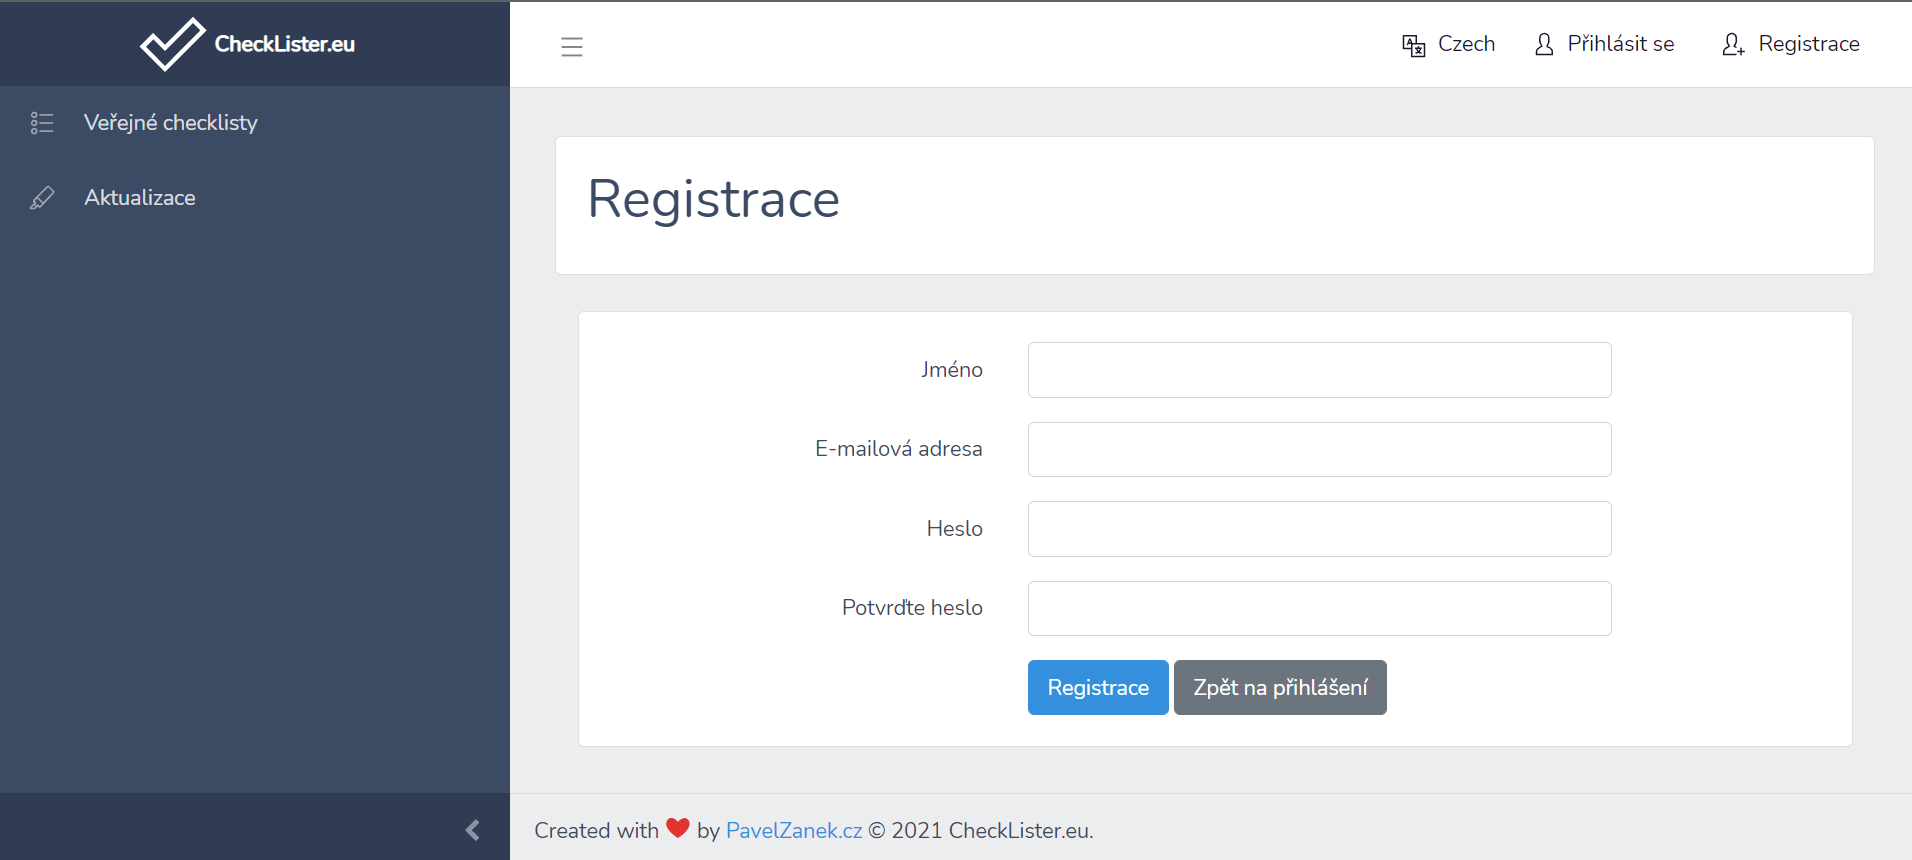 Registrace - krok 2